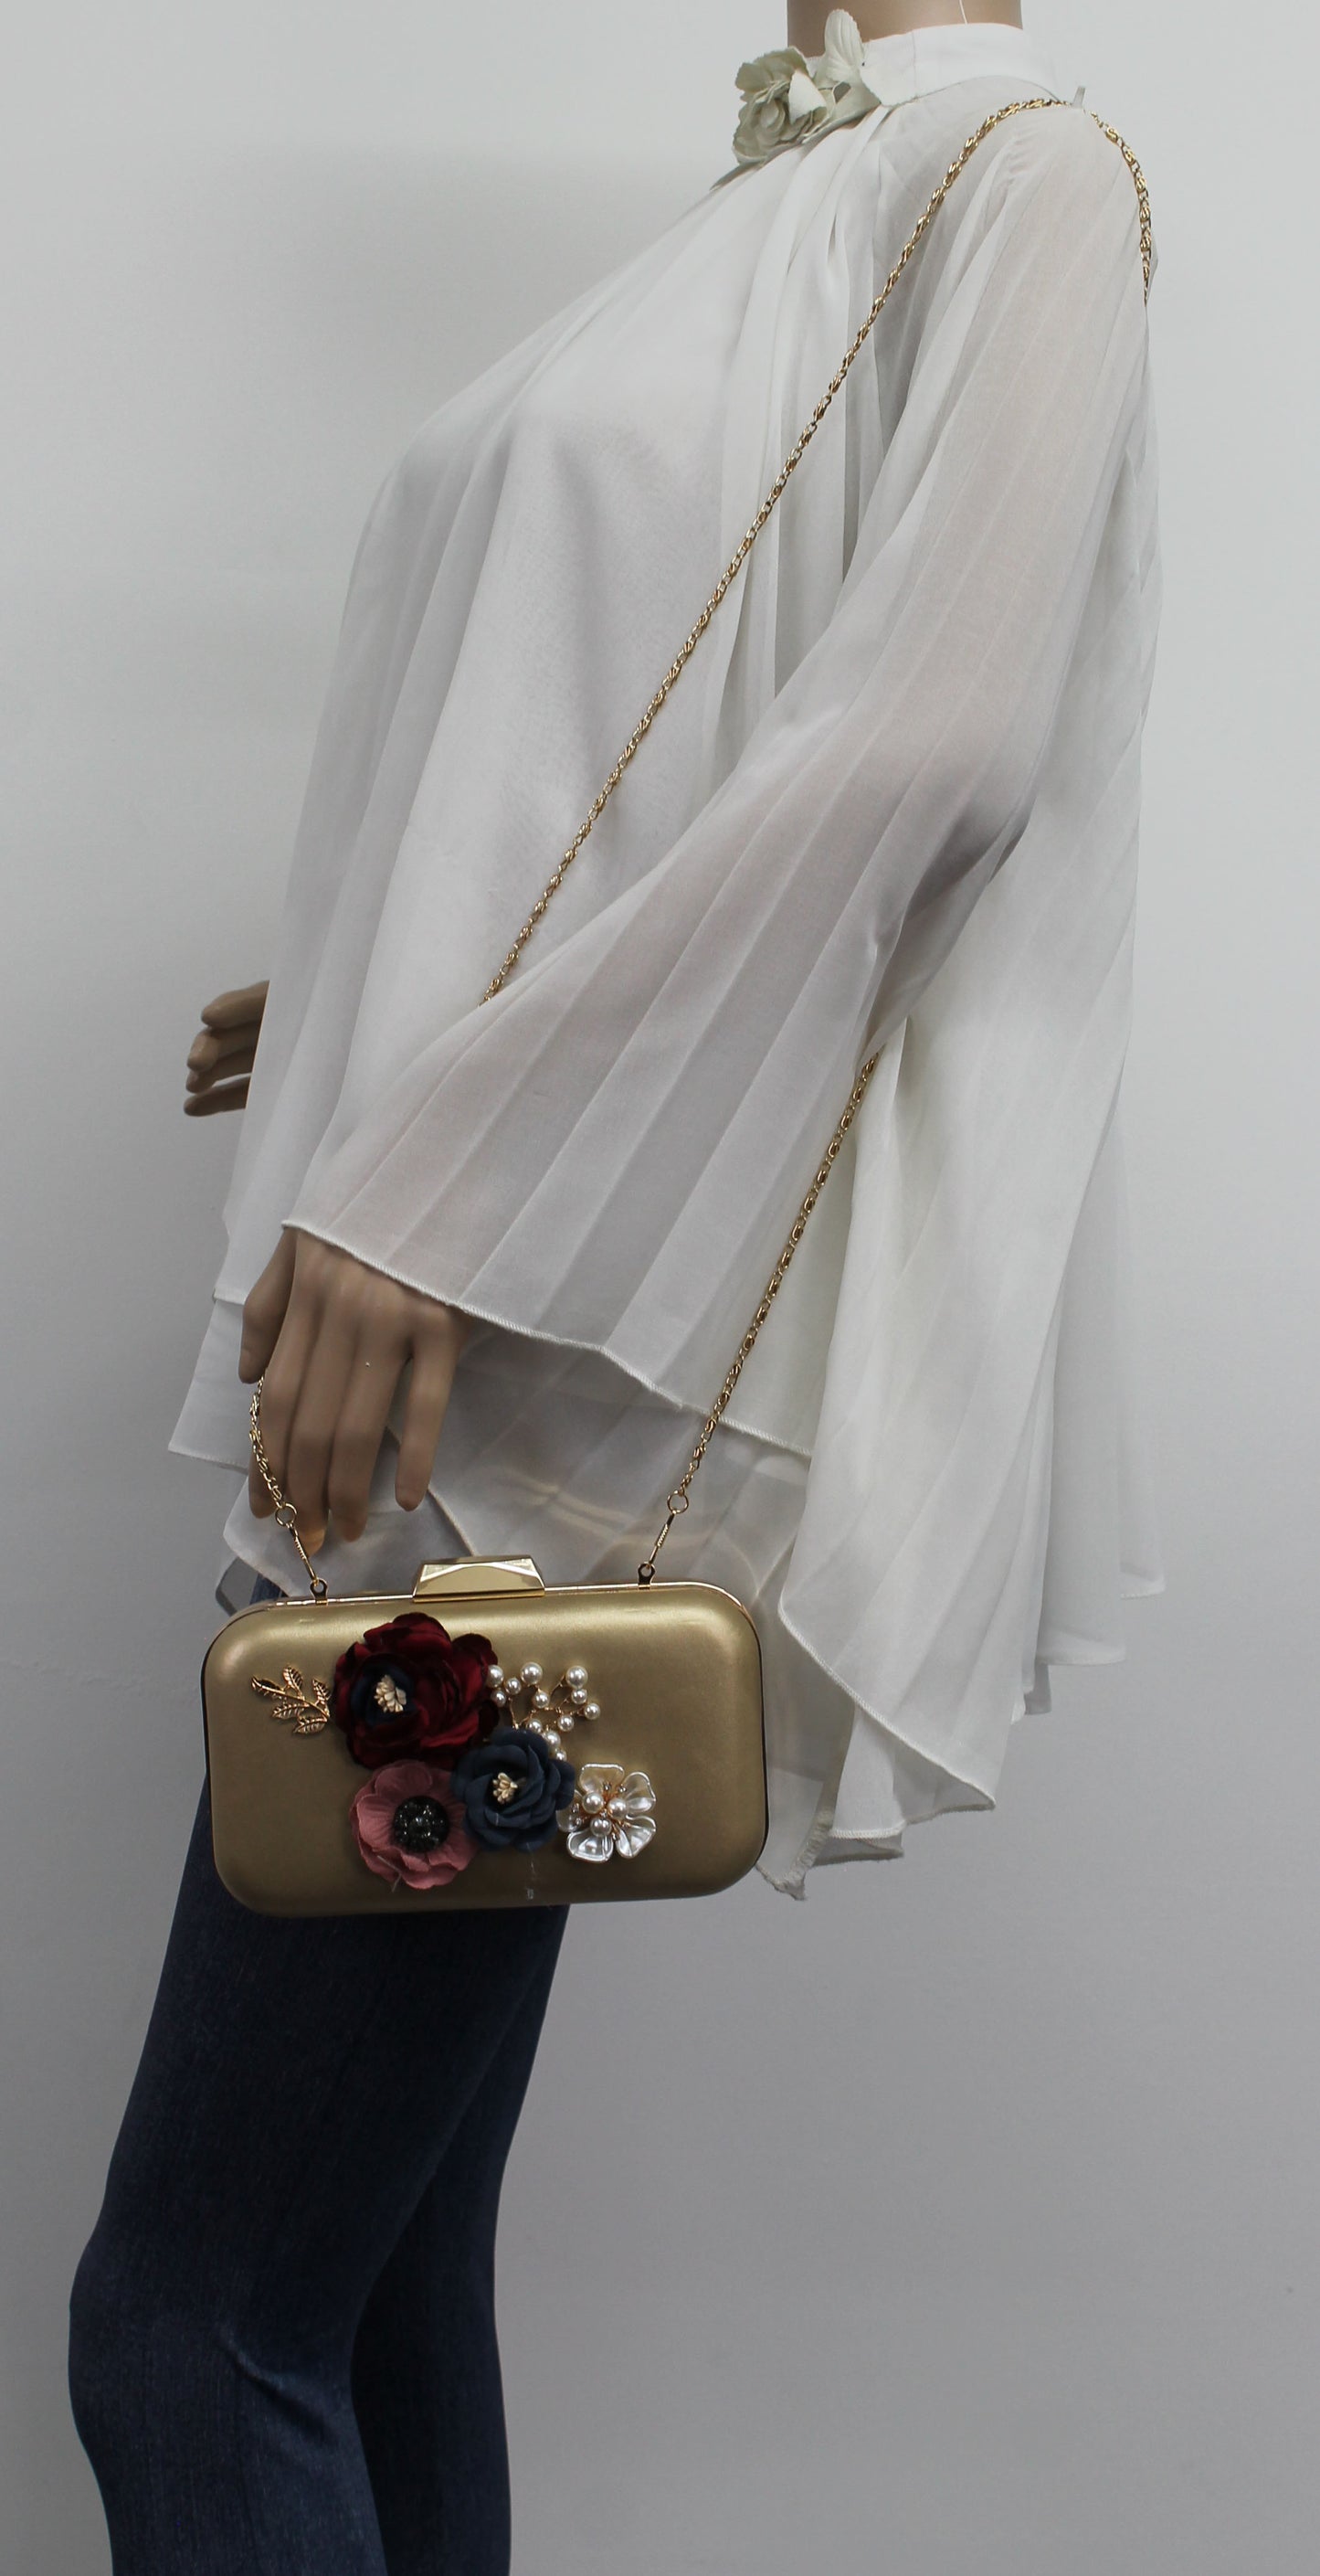 SWANKYSWANS Eliza Floral Clutch Bag Gold Cute Cheap Clutch Bag For Weddings School and Work